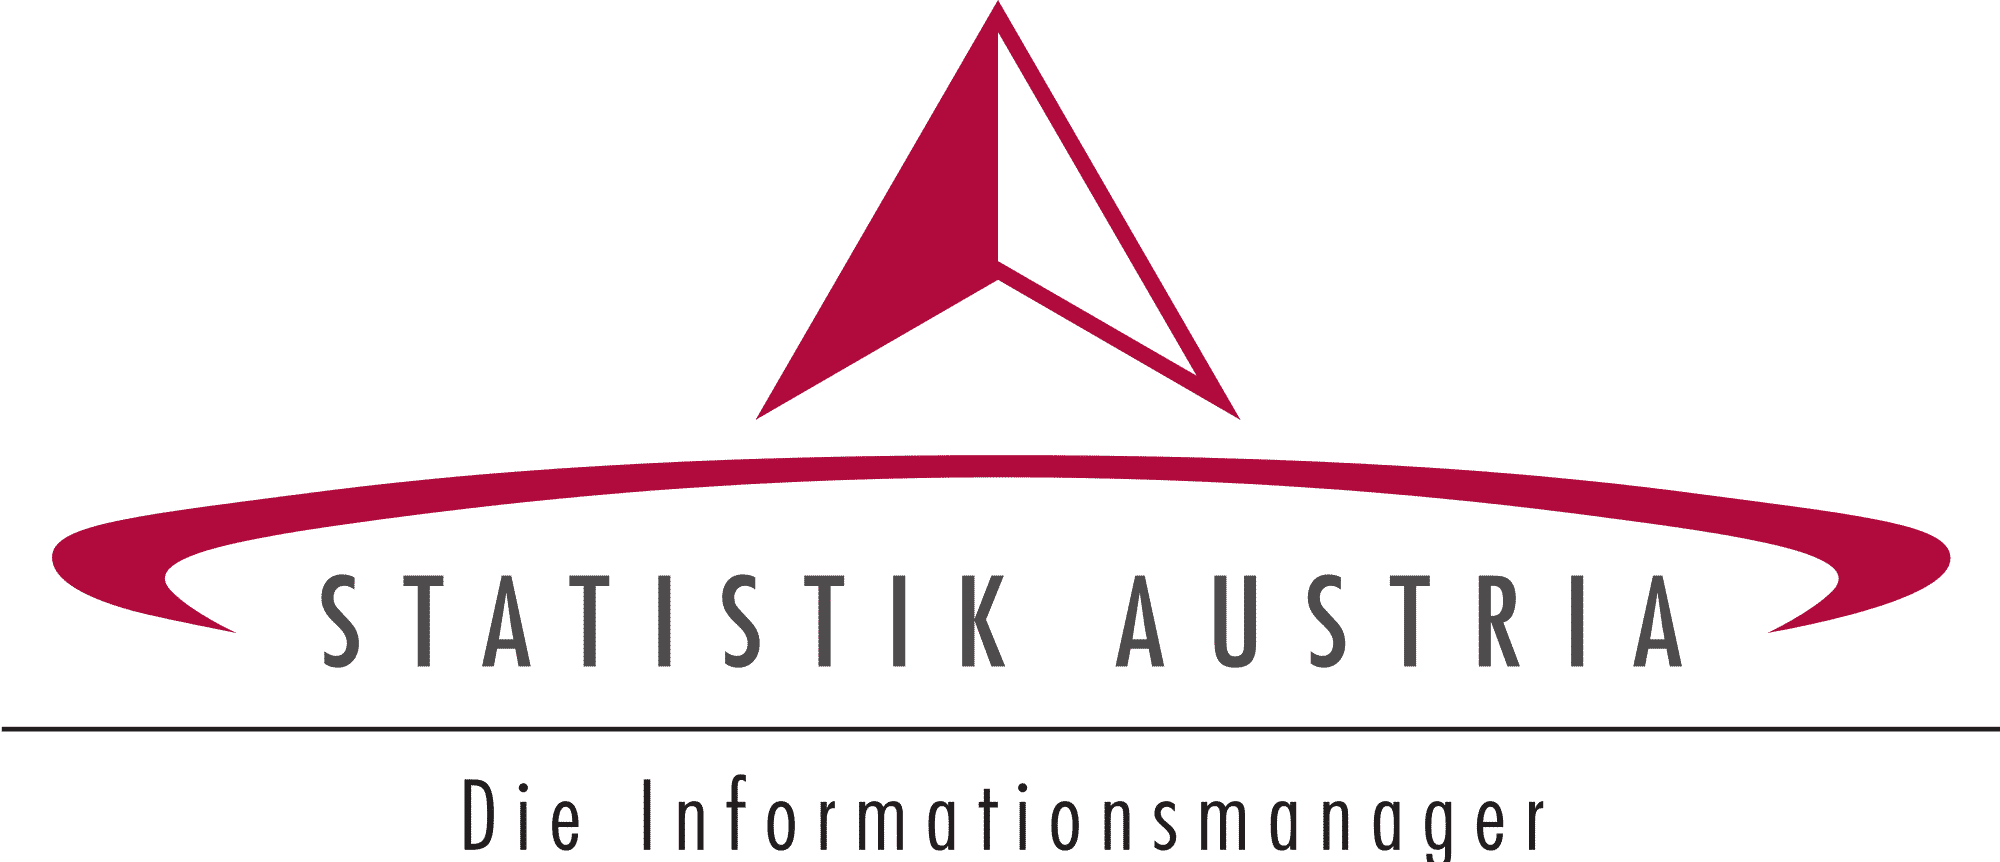 Kraftfahrzeuge - Neuzulassungen 2021 | Statistik Austria Logo.svg